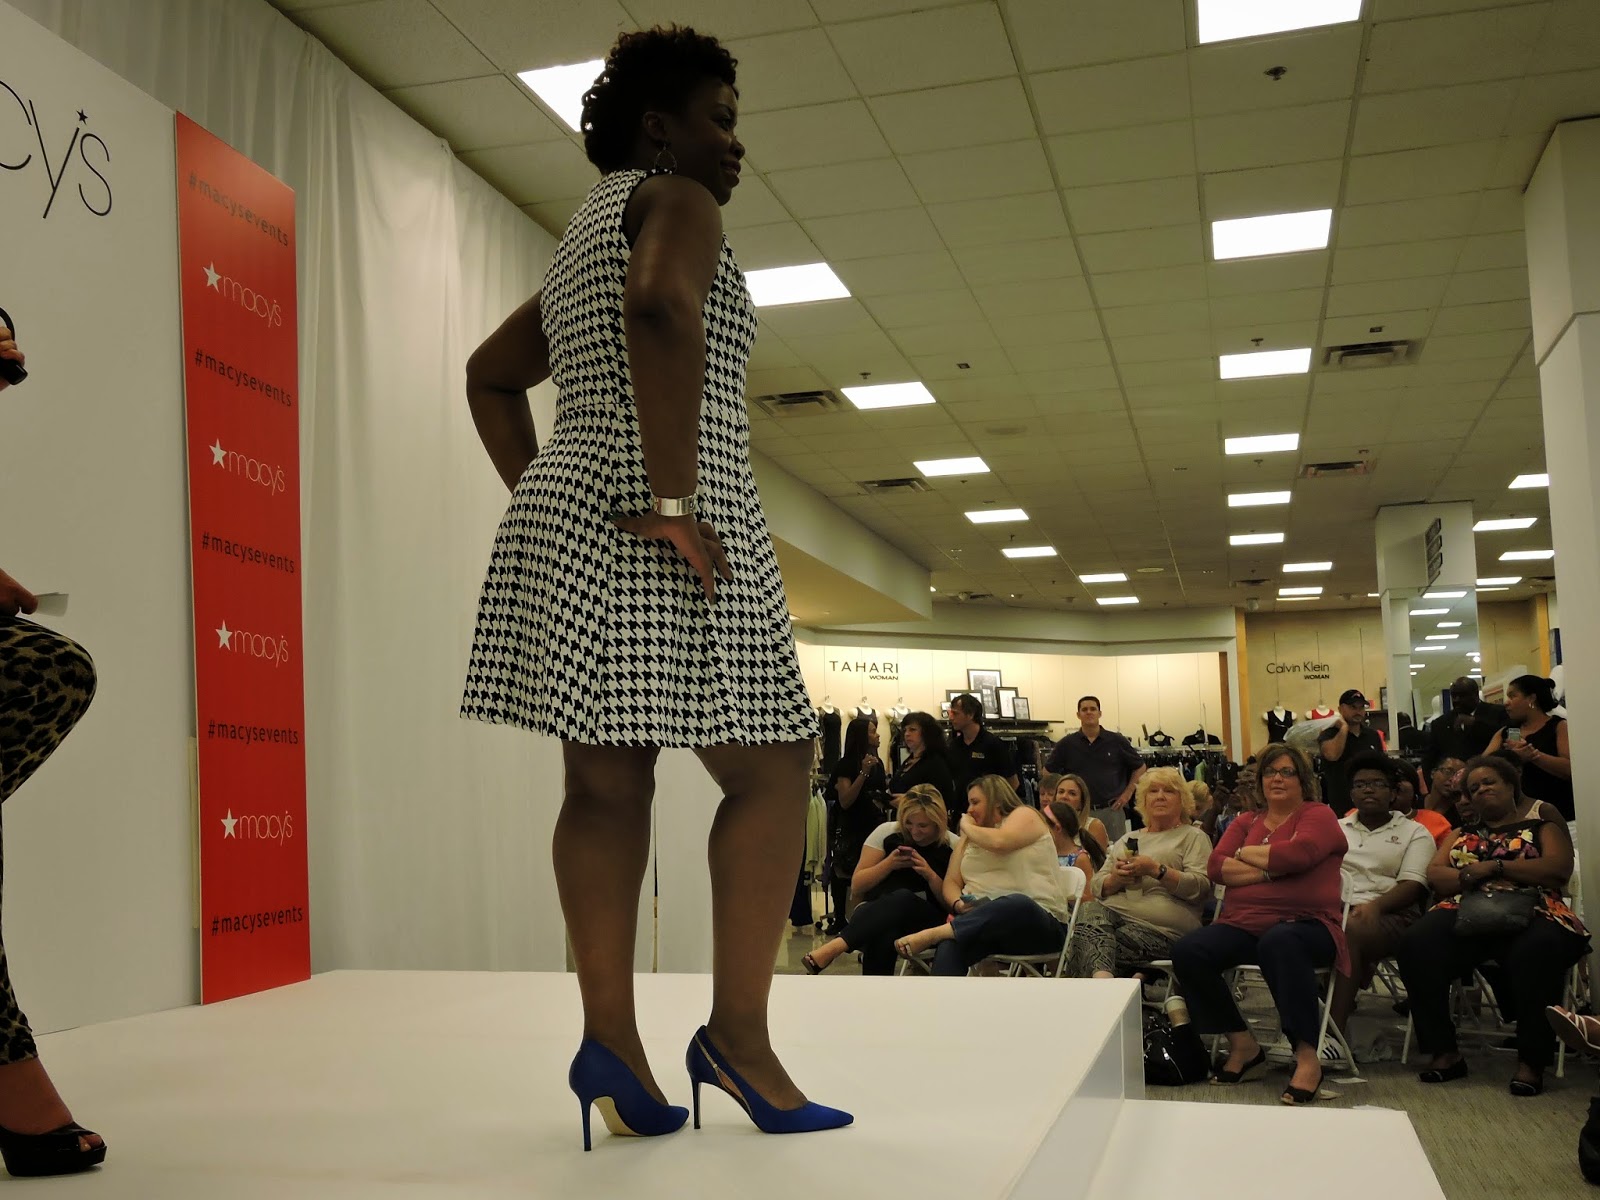 Macy's Fall Fashion Show Event with Emme Recap #MacysEvents @SheSpeaksUp @Macys via www.Productreviewmom.com